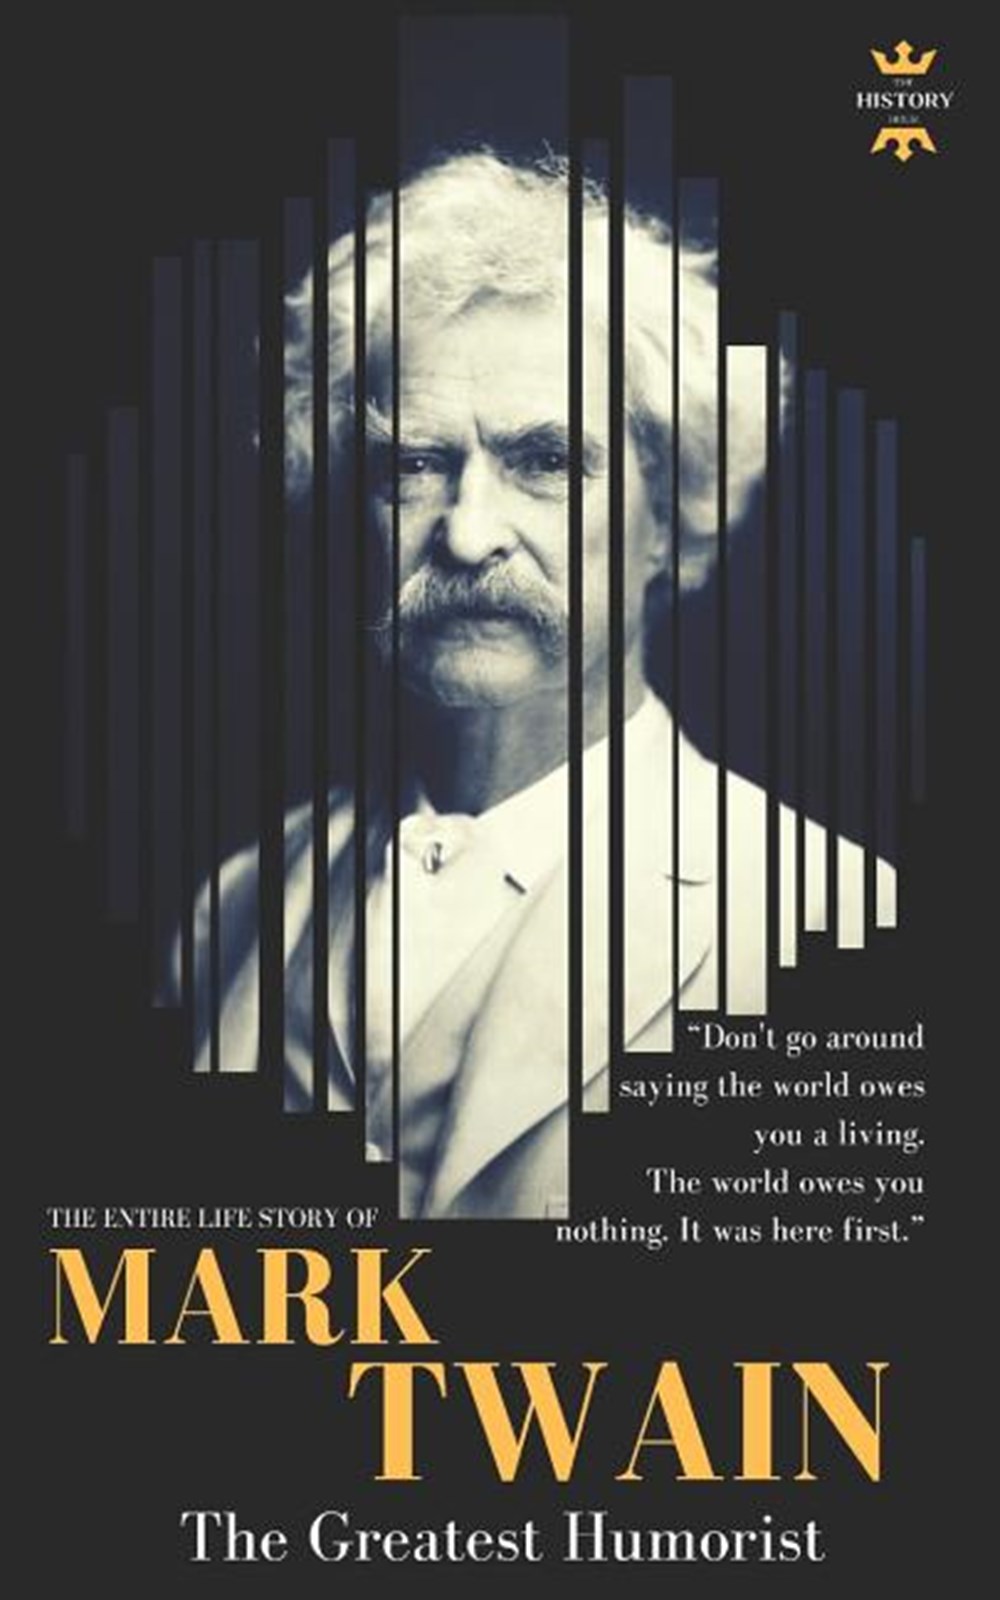 Mark Twain The greatest humorist America has produced. The Entire Life Story